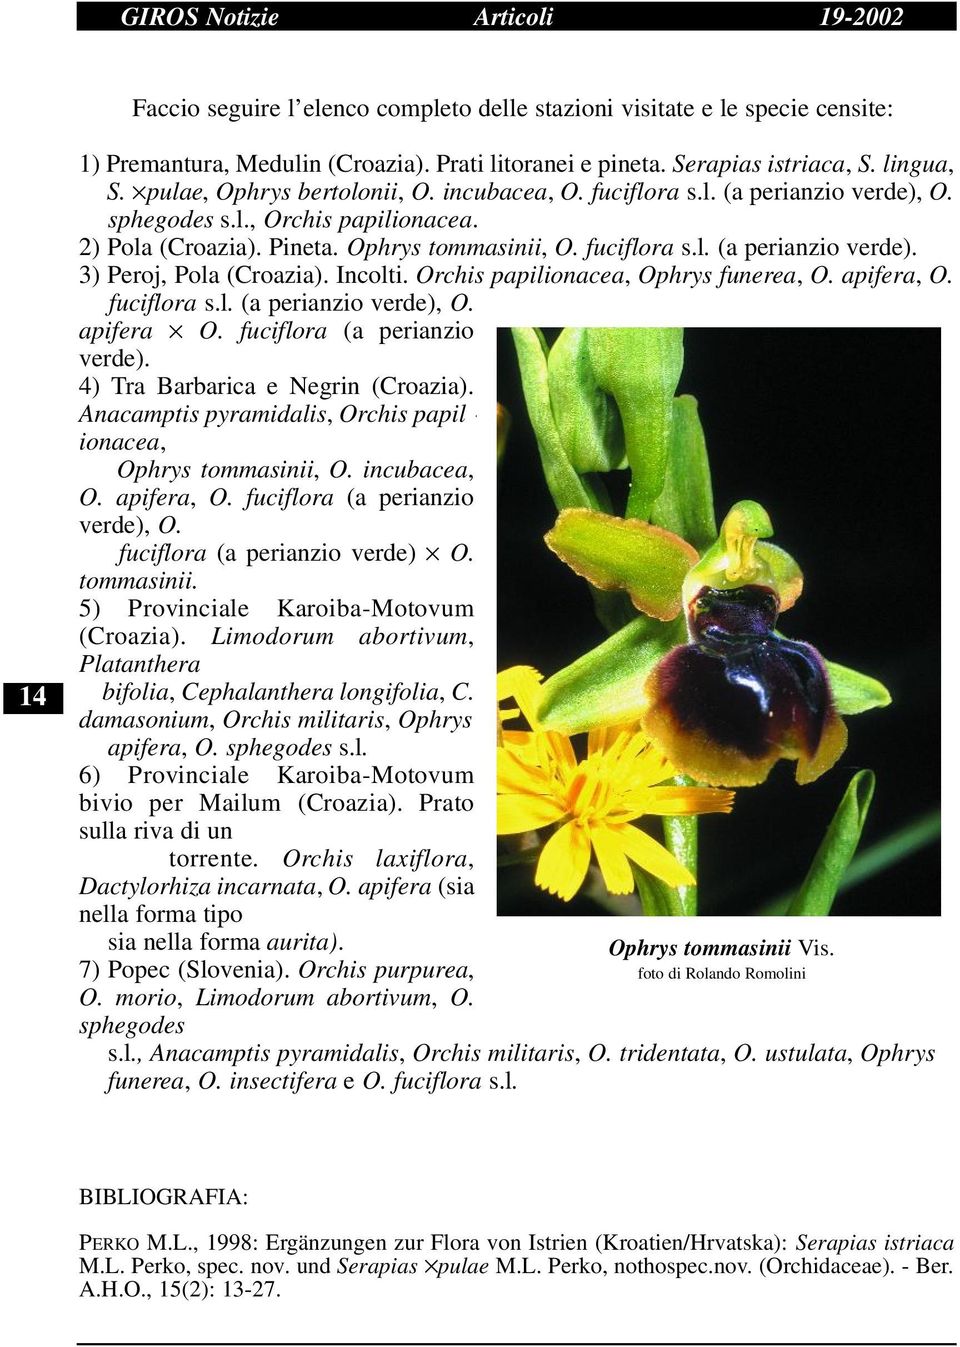 Incolti. Orchis papilionacea, Ophrys funerea, O. apifera, O. fuciflora s.l. (a perianzio verde), O. a p i f e r a O. fuciflora (a perianzio verde). 4) Tra Barbarica e Negrin (Croazia).